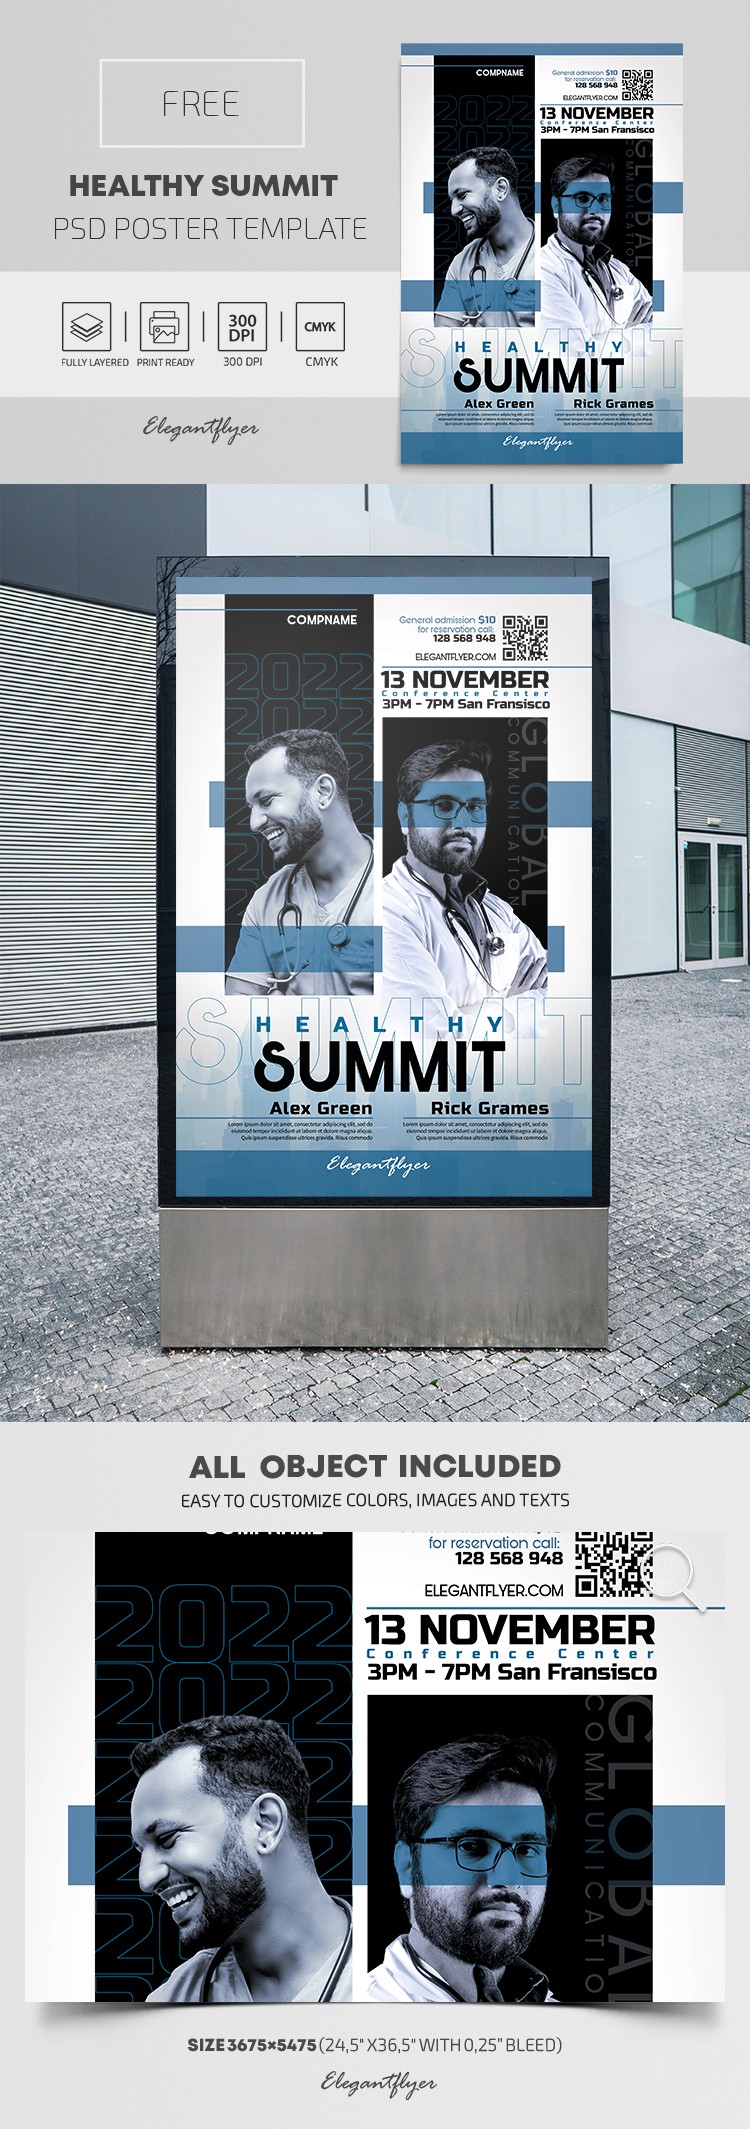 Gesunde Gipfel-Poster by ElegantFlyer